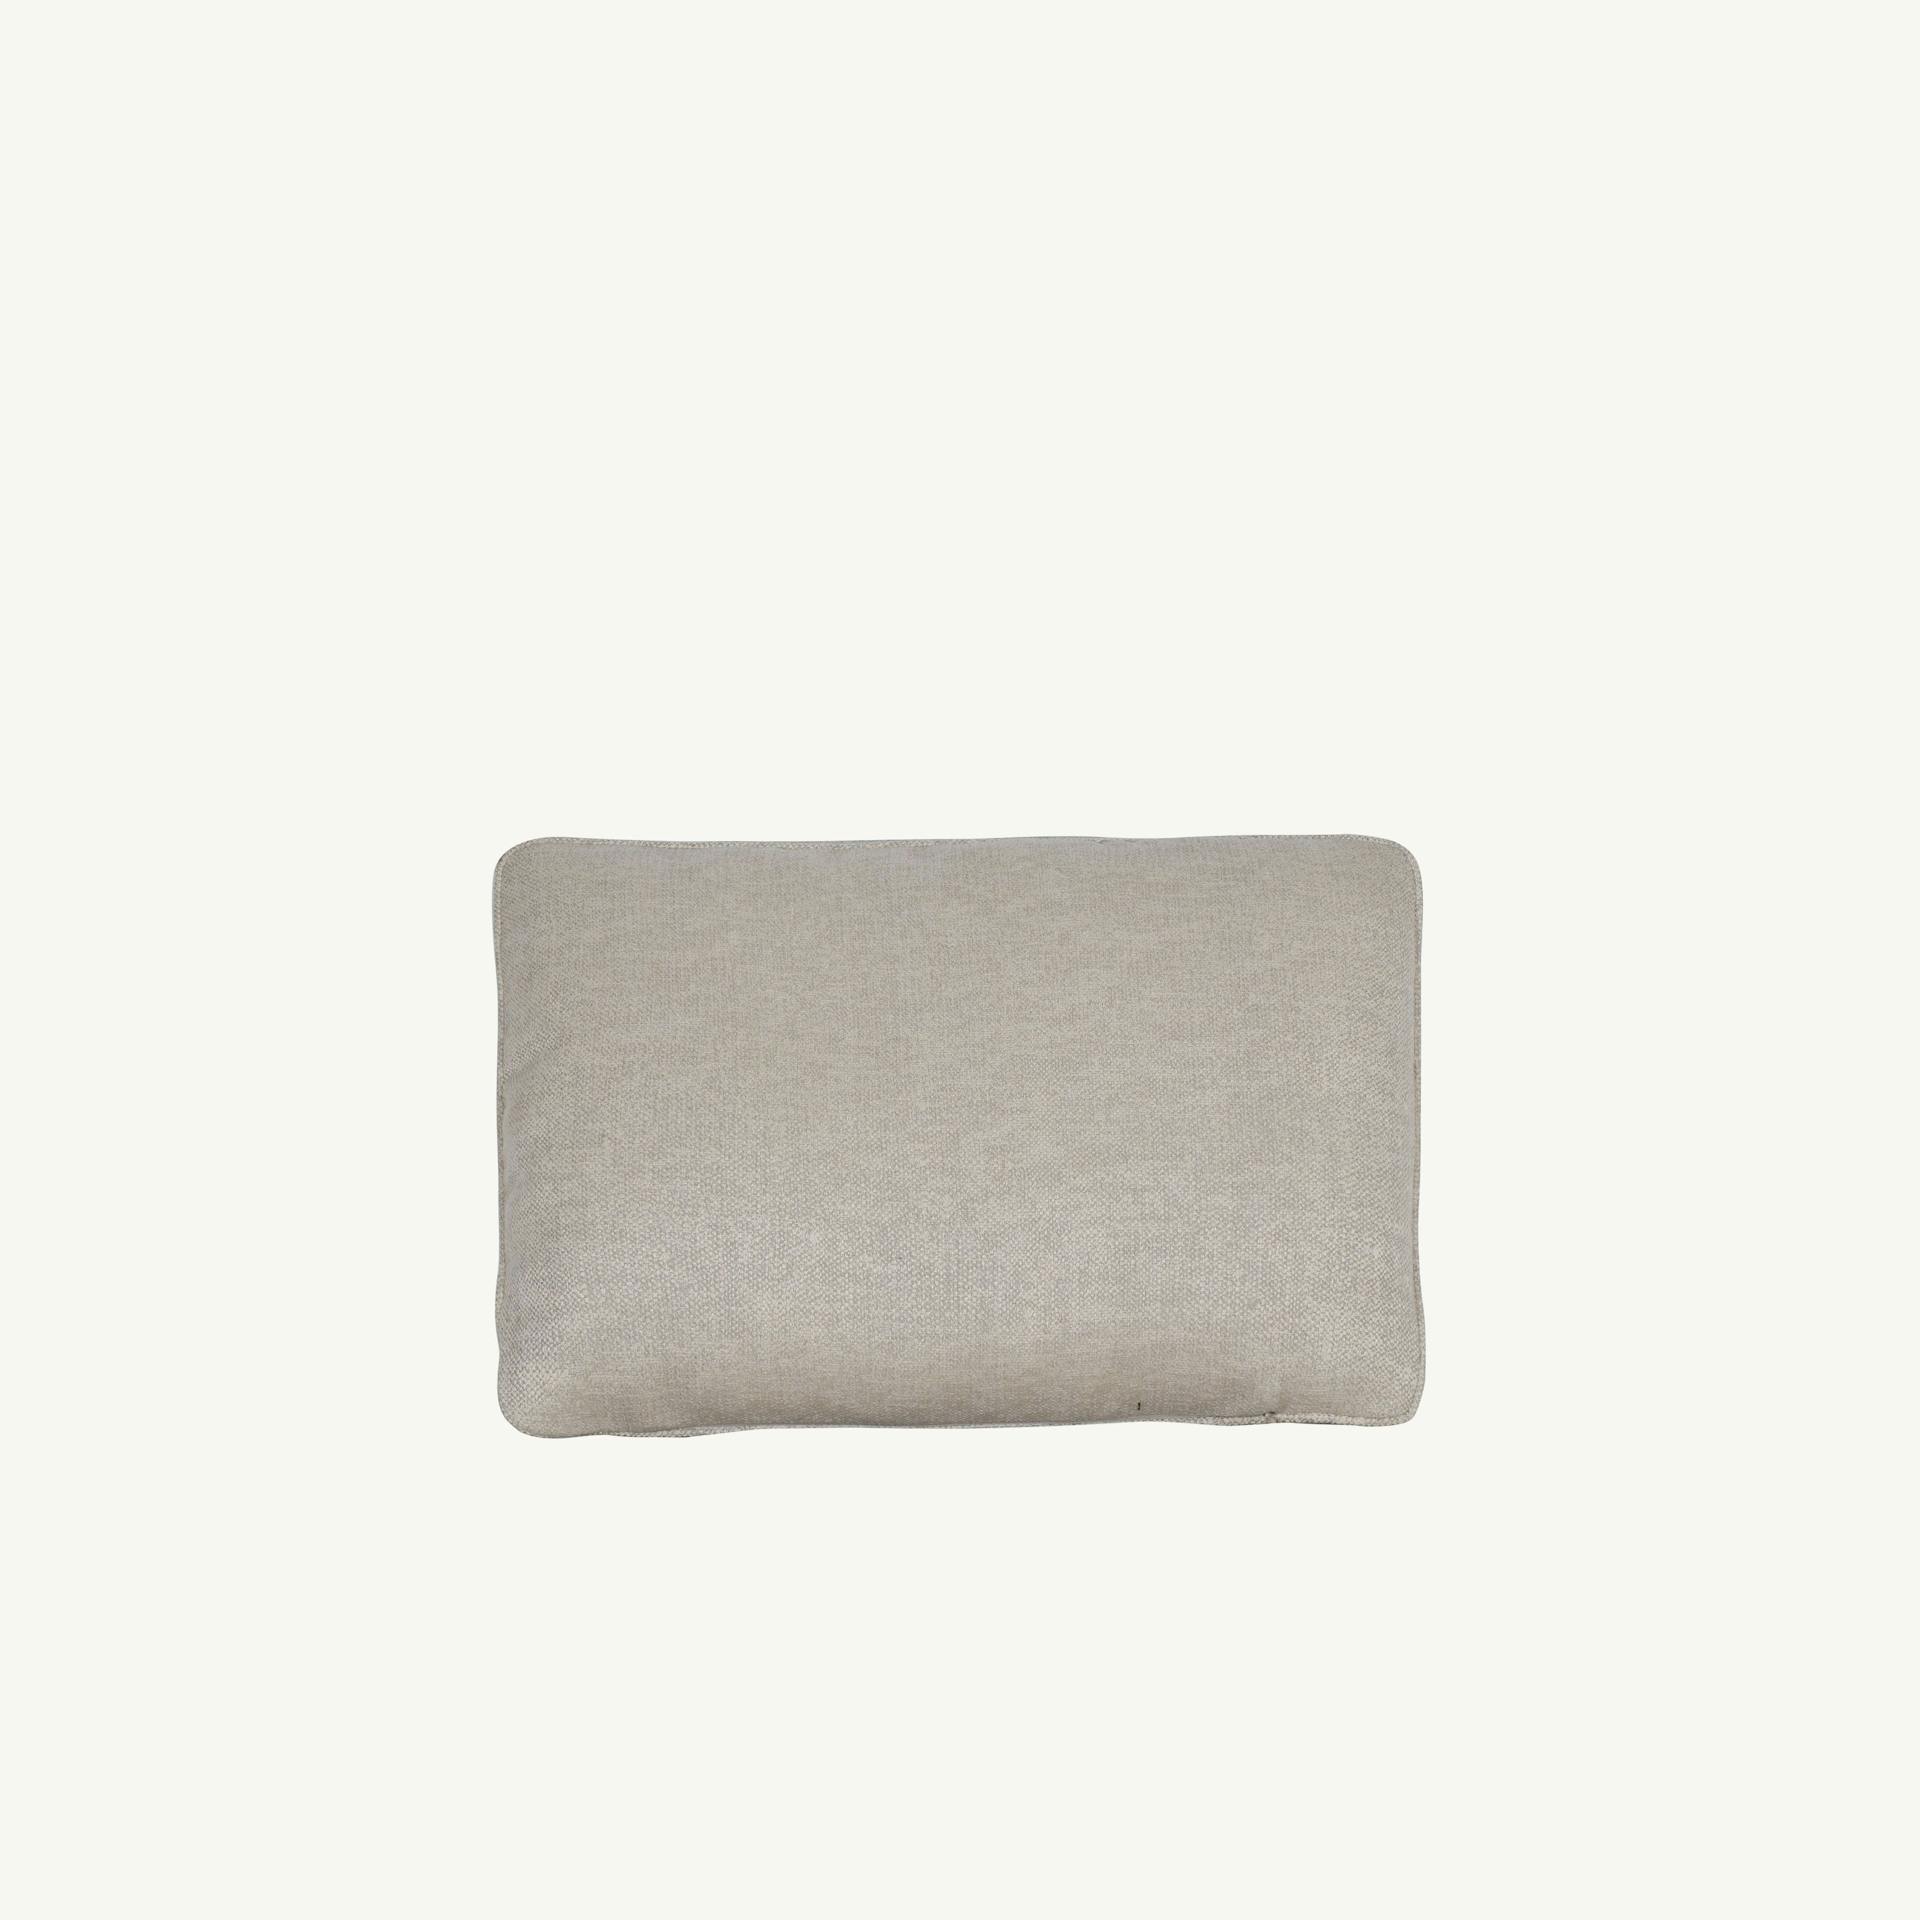 22" x 15" Cushion Accent Pillow